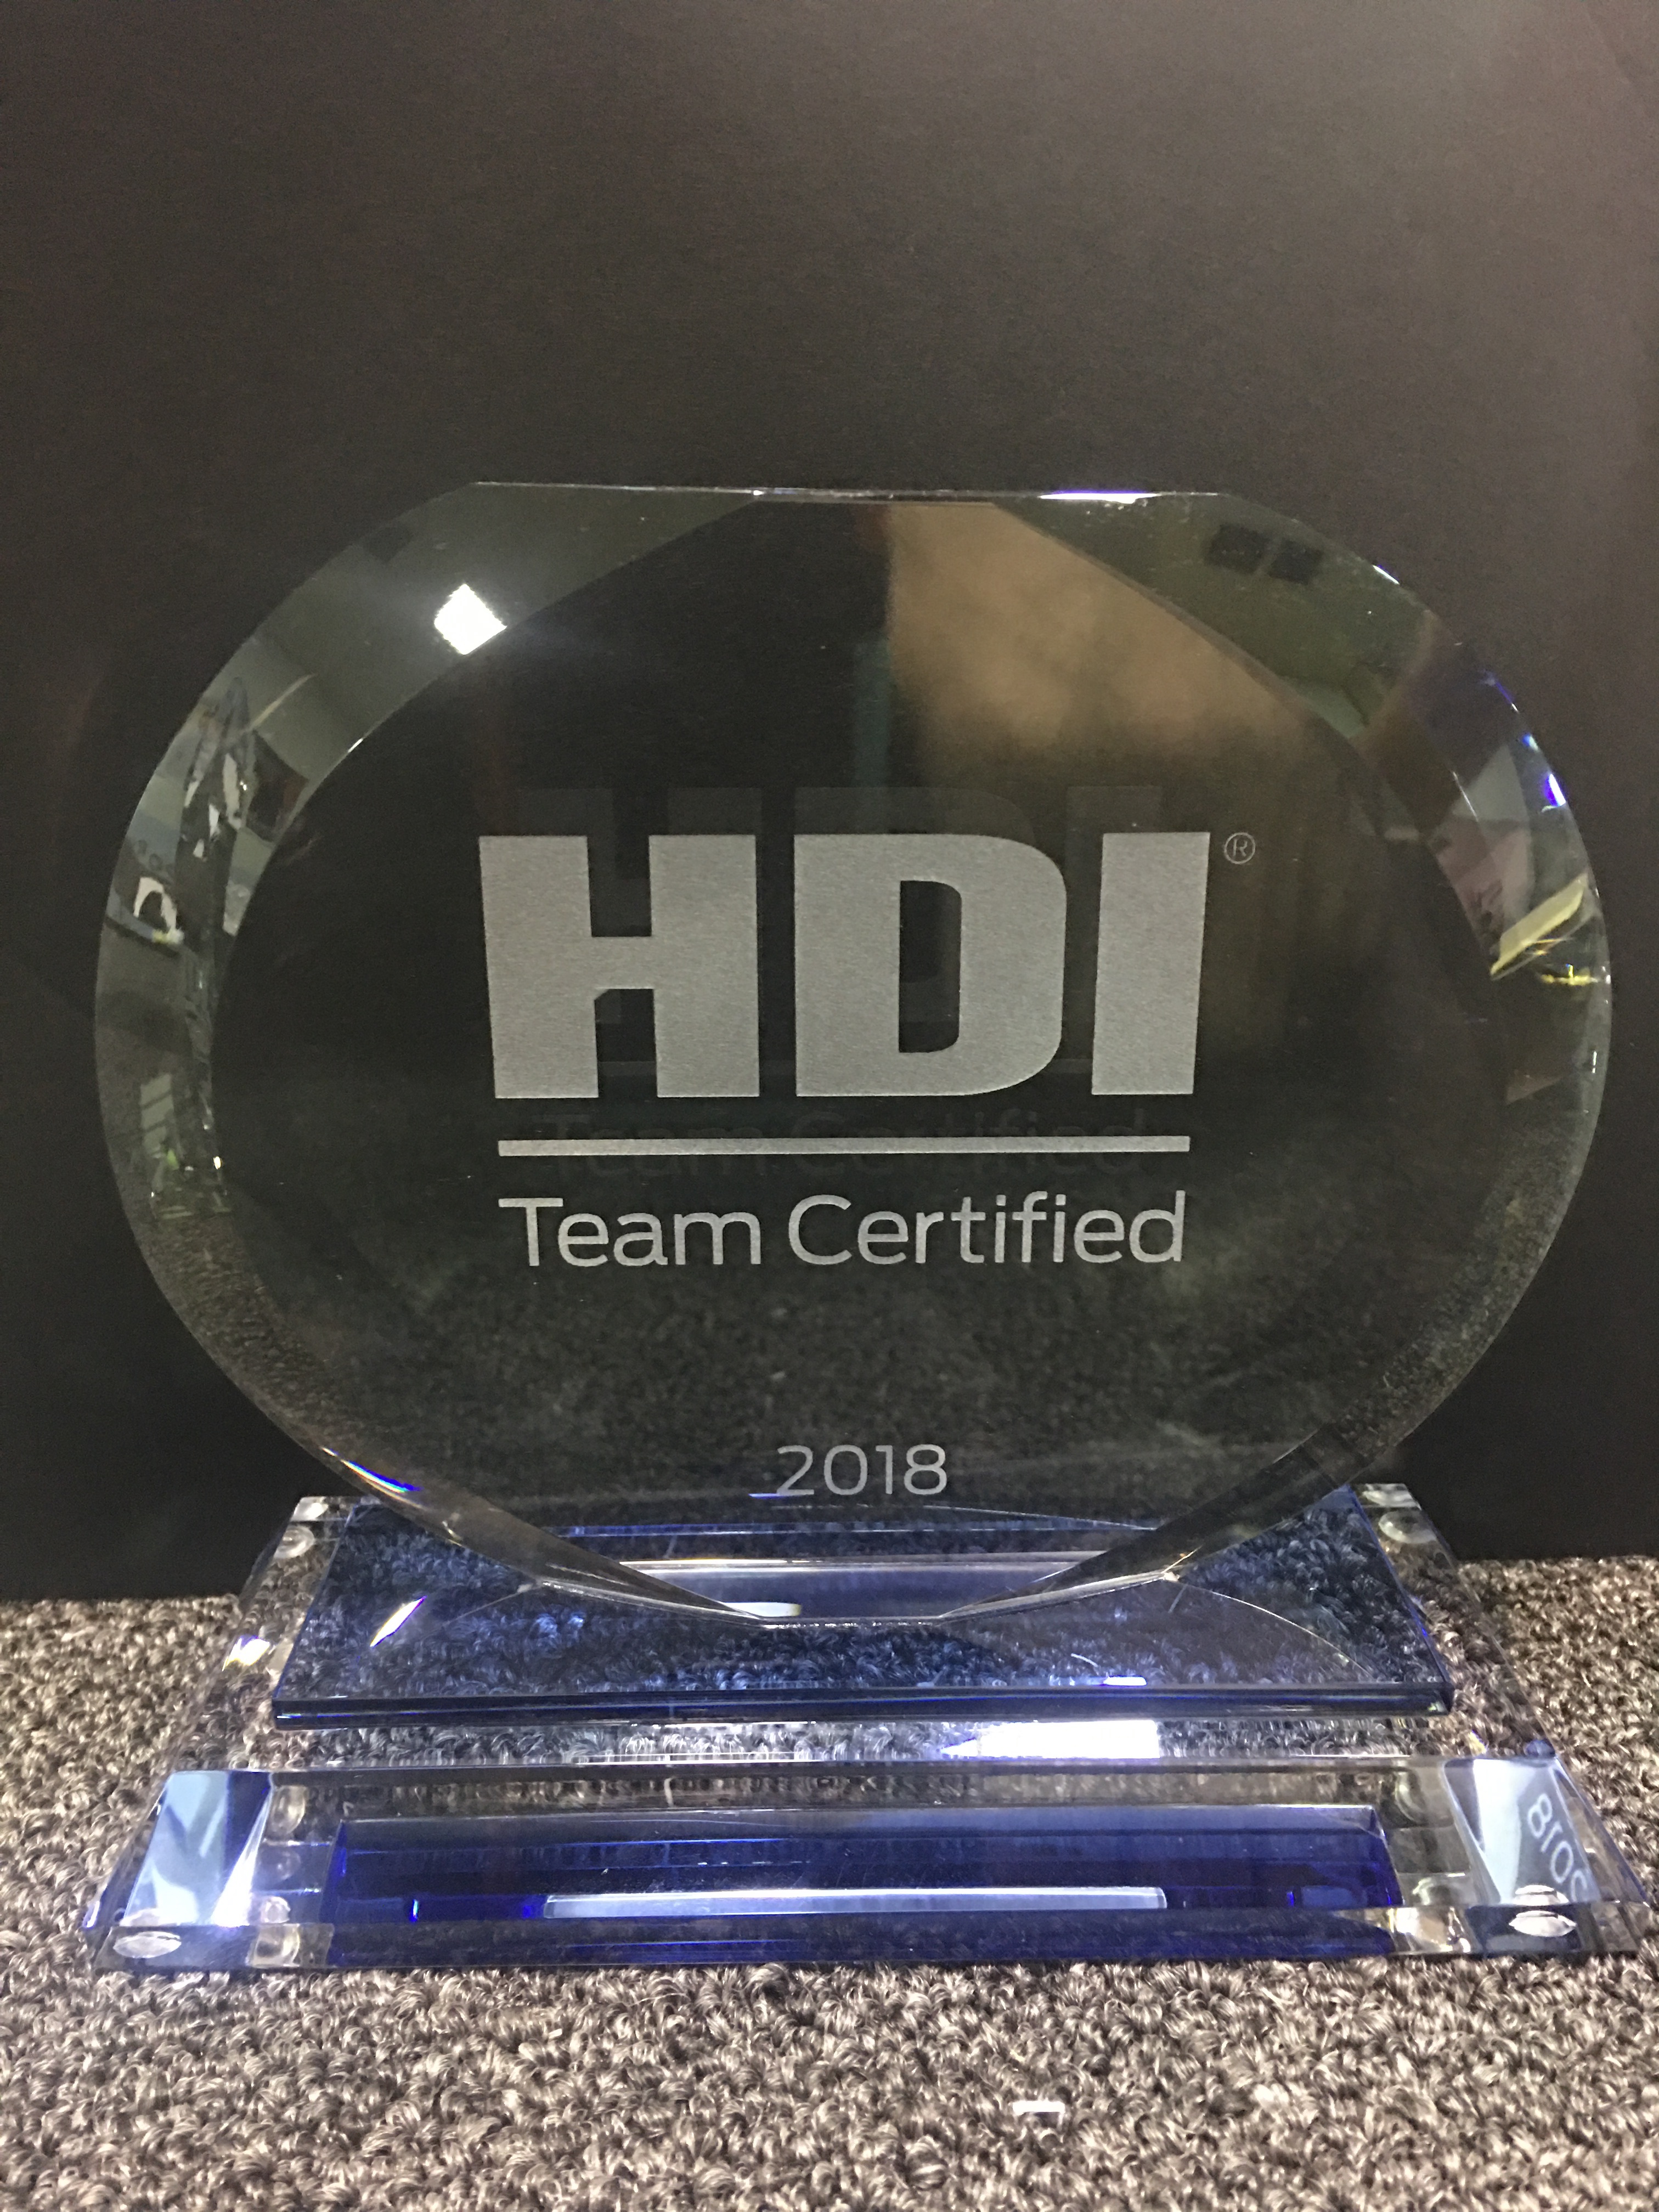 HDI Team Certified 2018